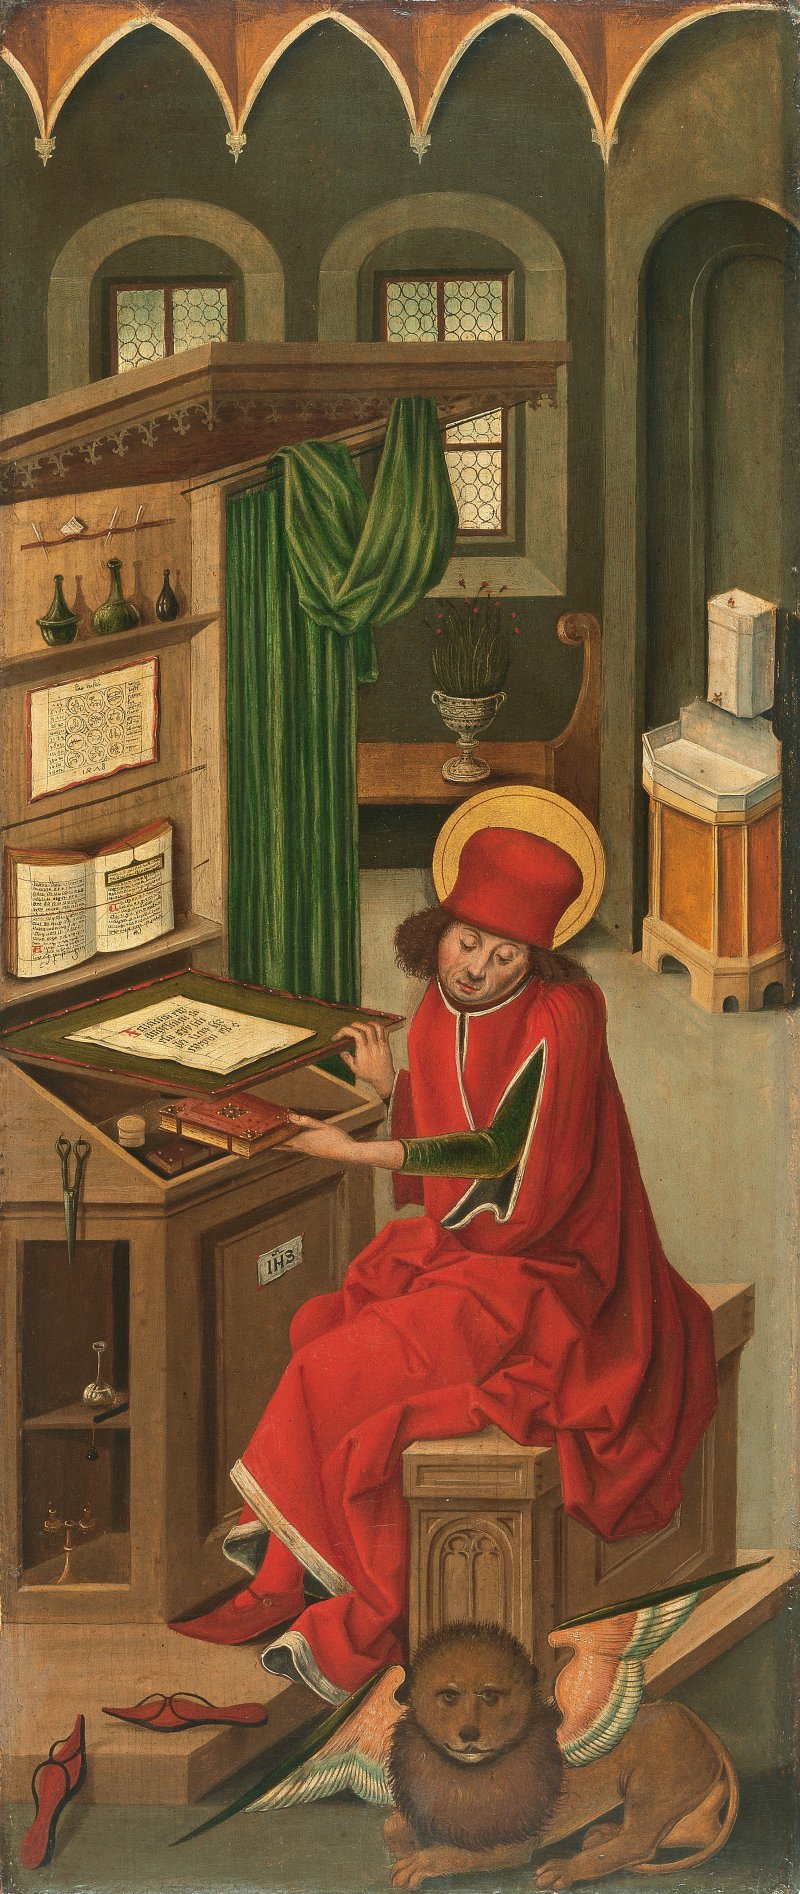  Saint Mark the Evangelist. El evangelista san Marcos, 1478